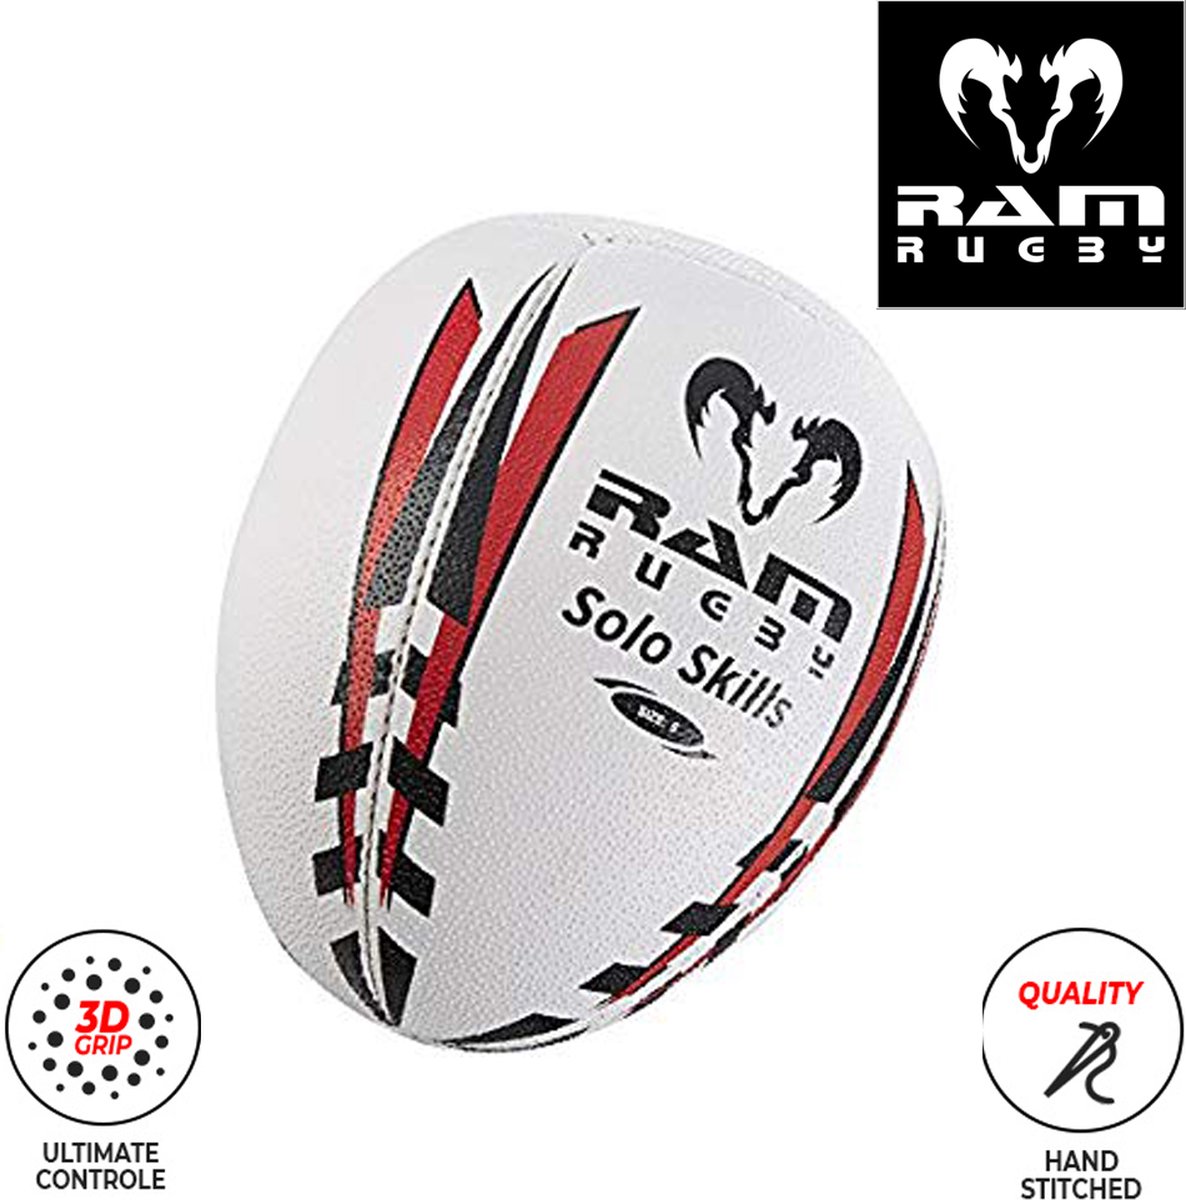 Solo Skill Rugby Ball - Ultieme individuele training - 3D Grip - Oefen Kaatsen en Vangen individueel Size 3 RAM® Engeland - Uniek 3d Grip techn. Prof.